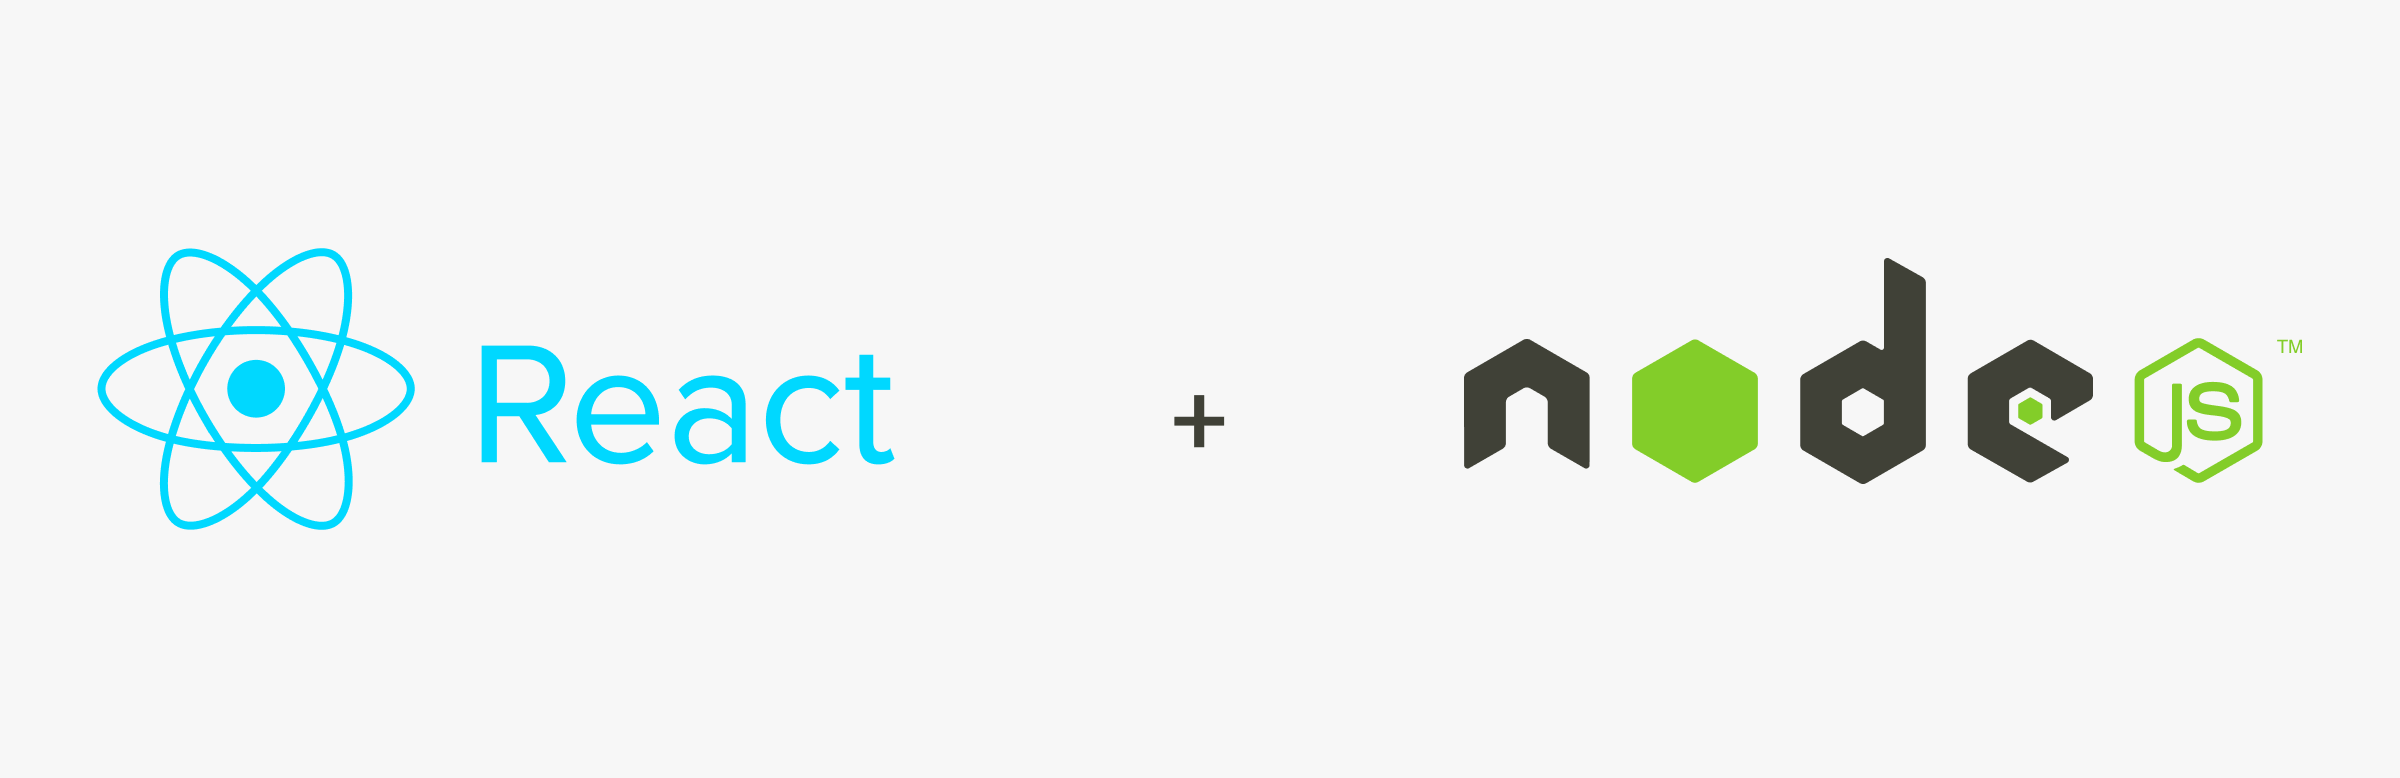 React and Node.js logos with a plus sign between them.